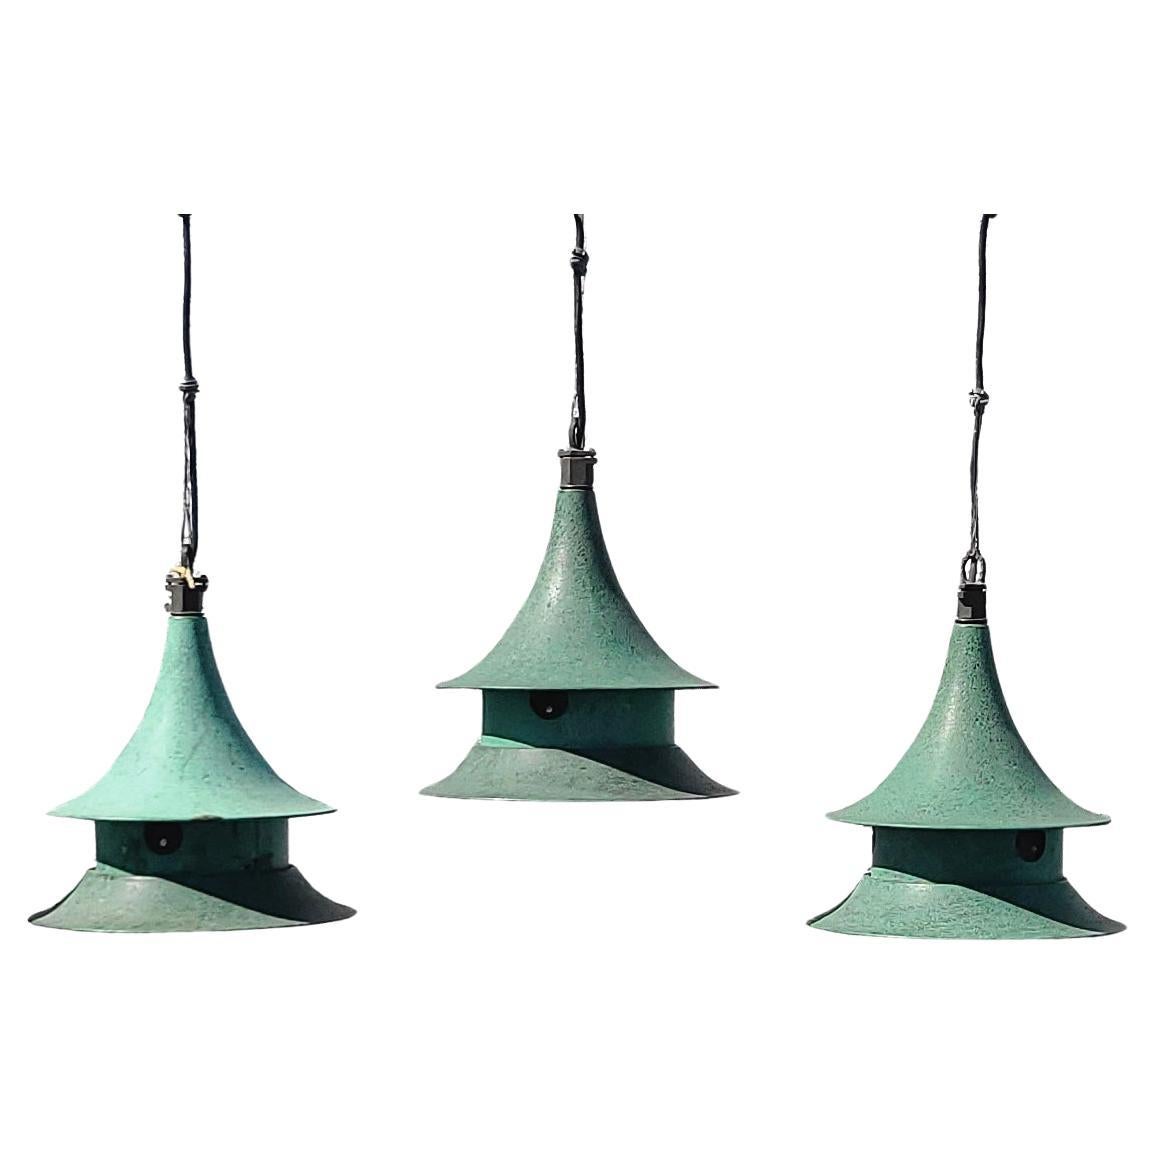 Set of 3 Copper Birdhouse Pendants by Kim Lighting